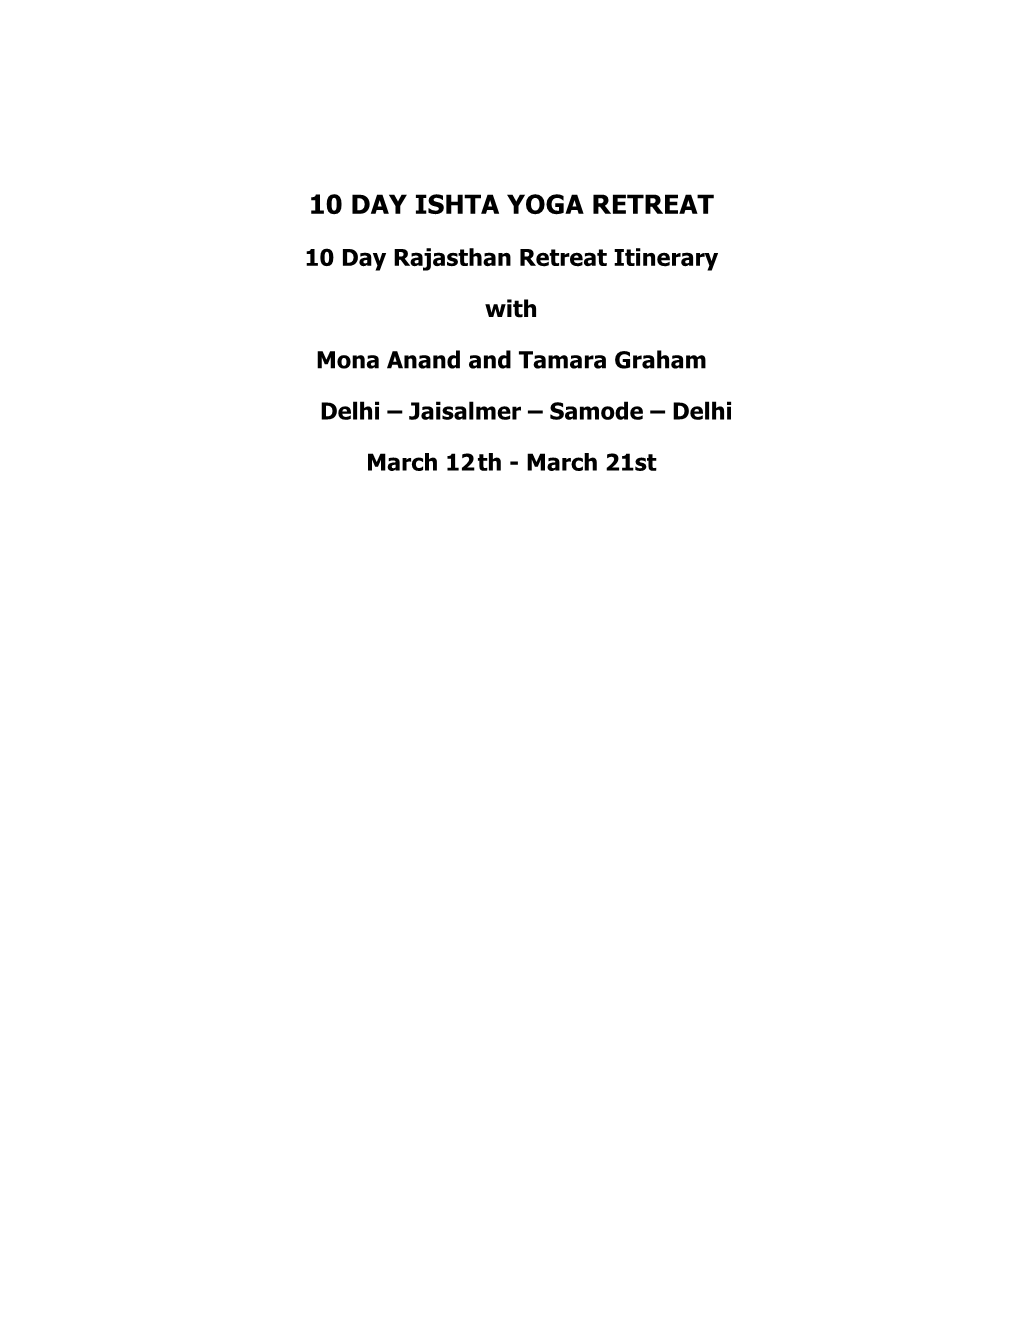 10 Day Ishta Yoga Retreat 2019